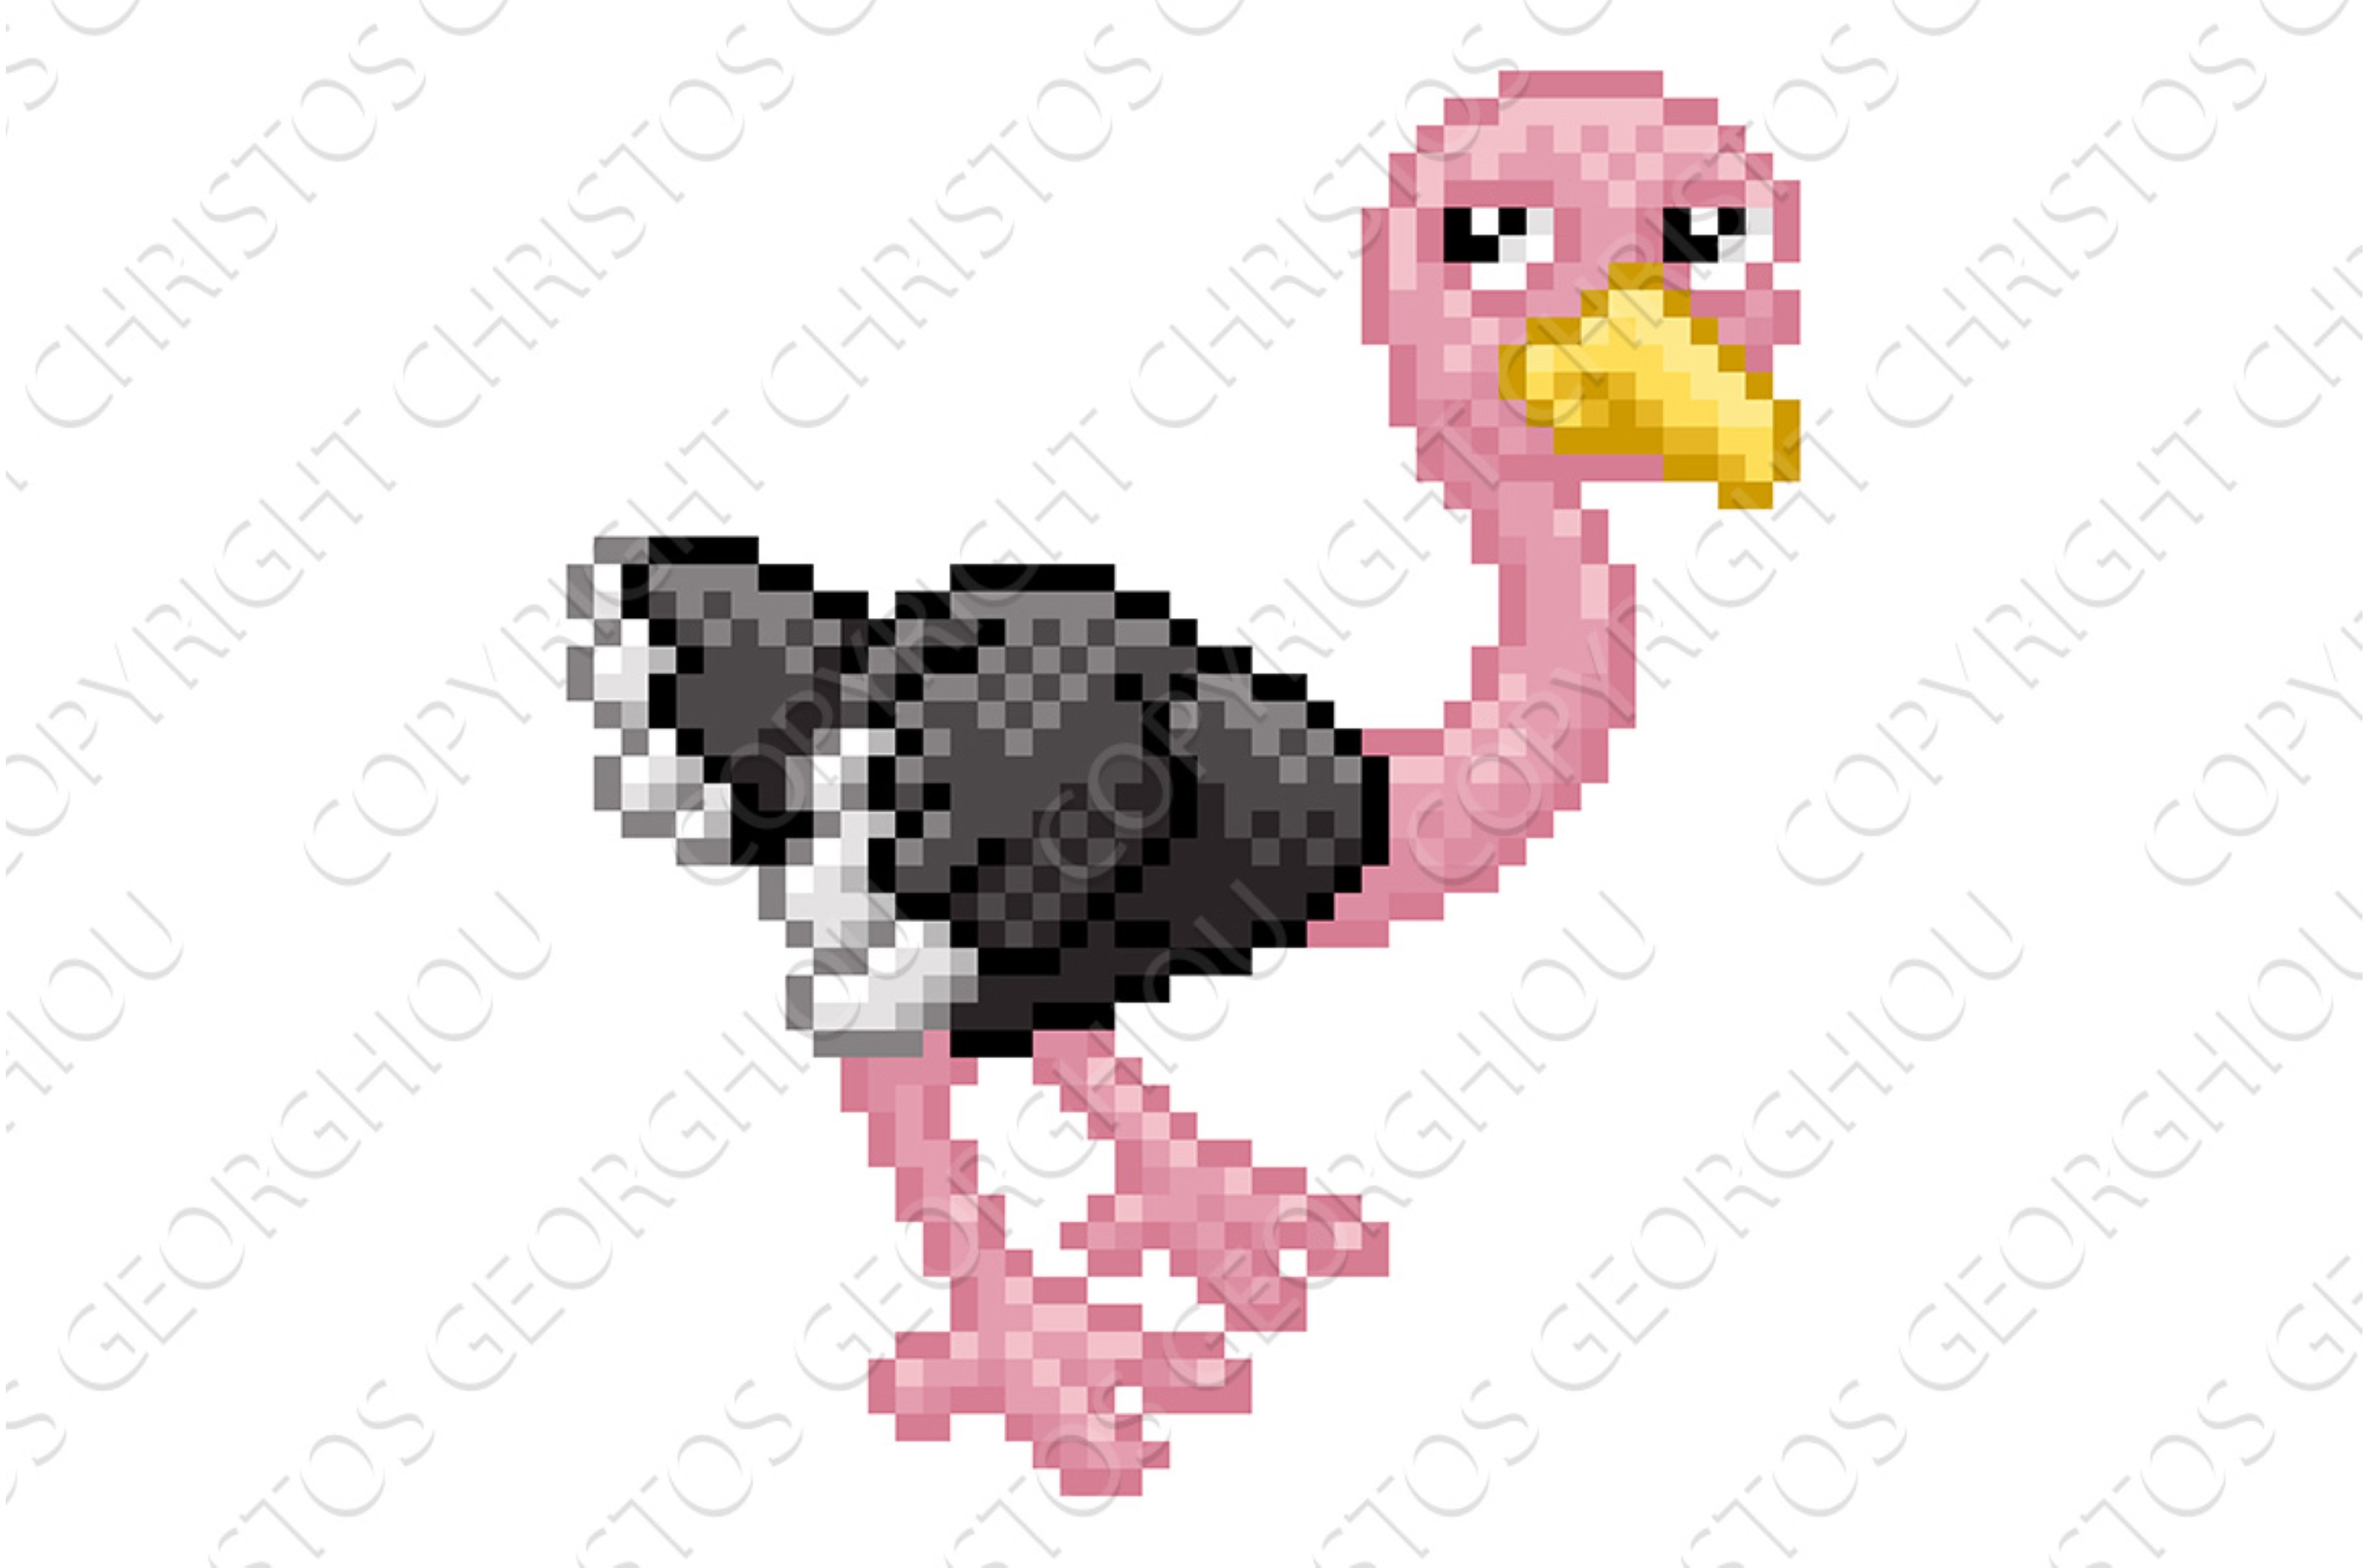 Ostrich Bird Pixel Art Safari Animal cover image.